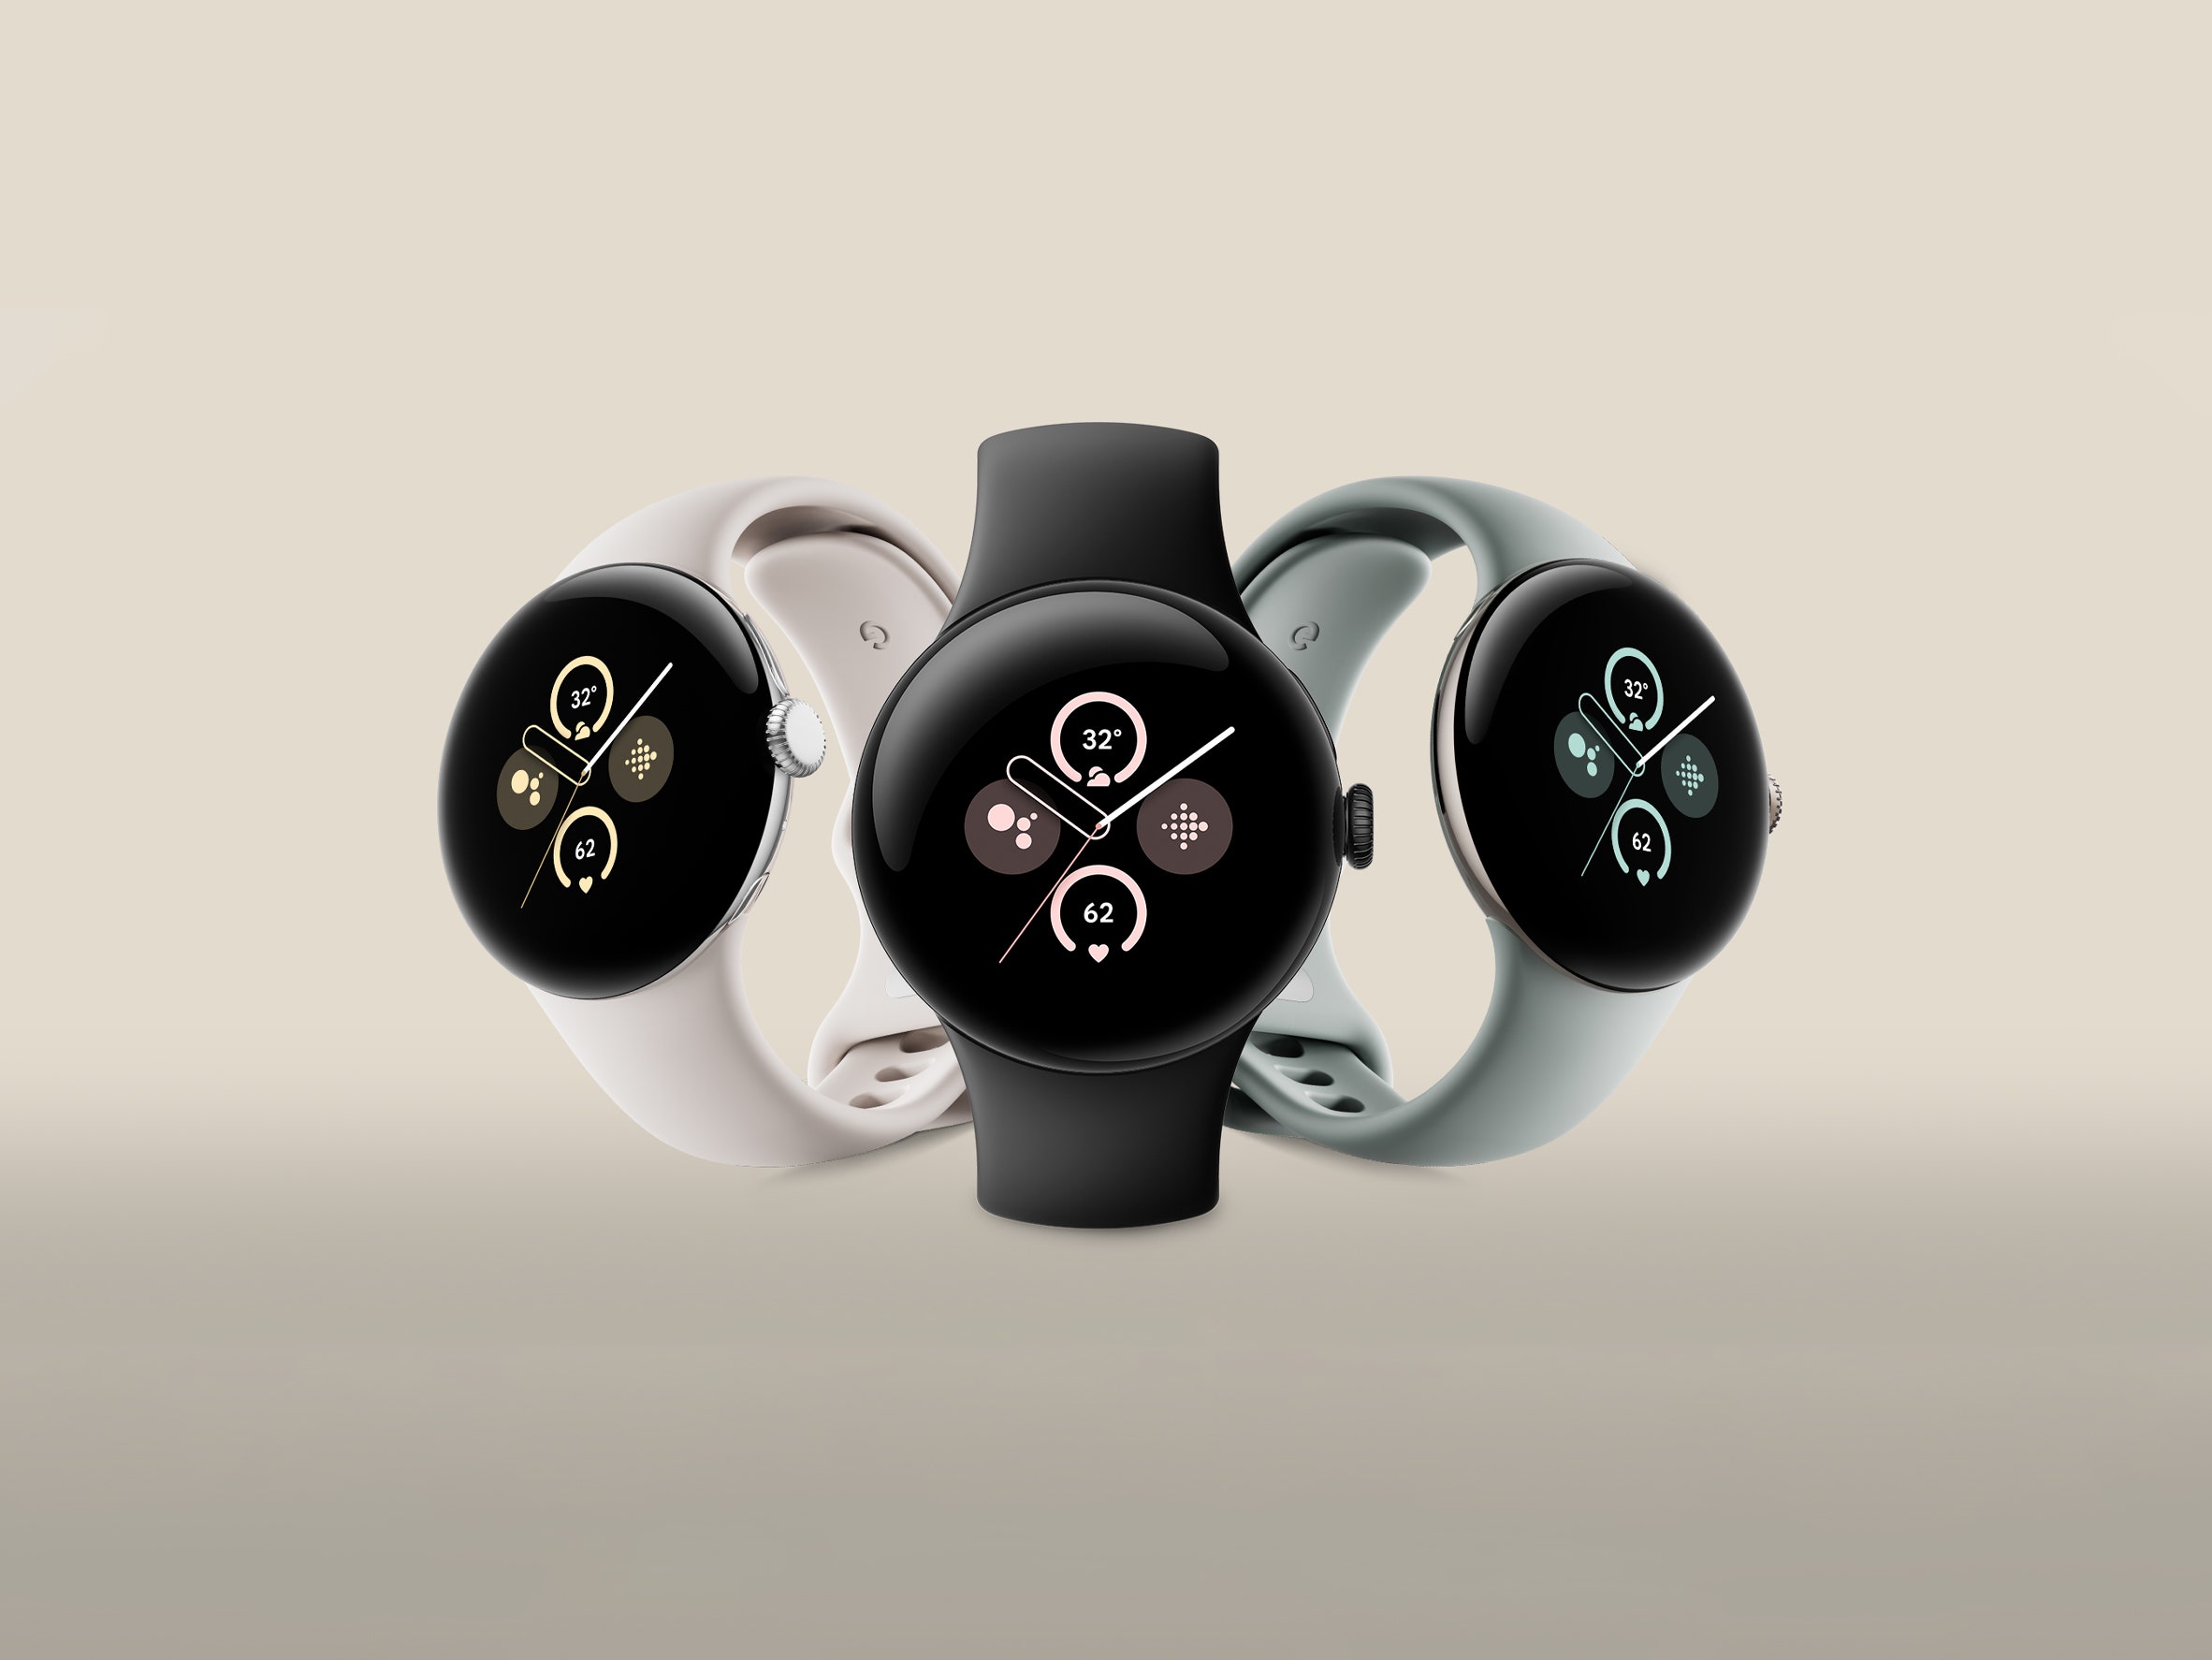 Google Pixel Watch 2 smart watches in various colors